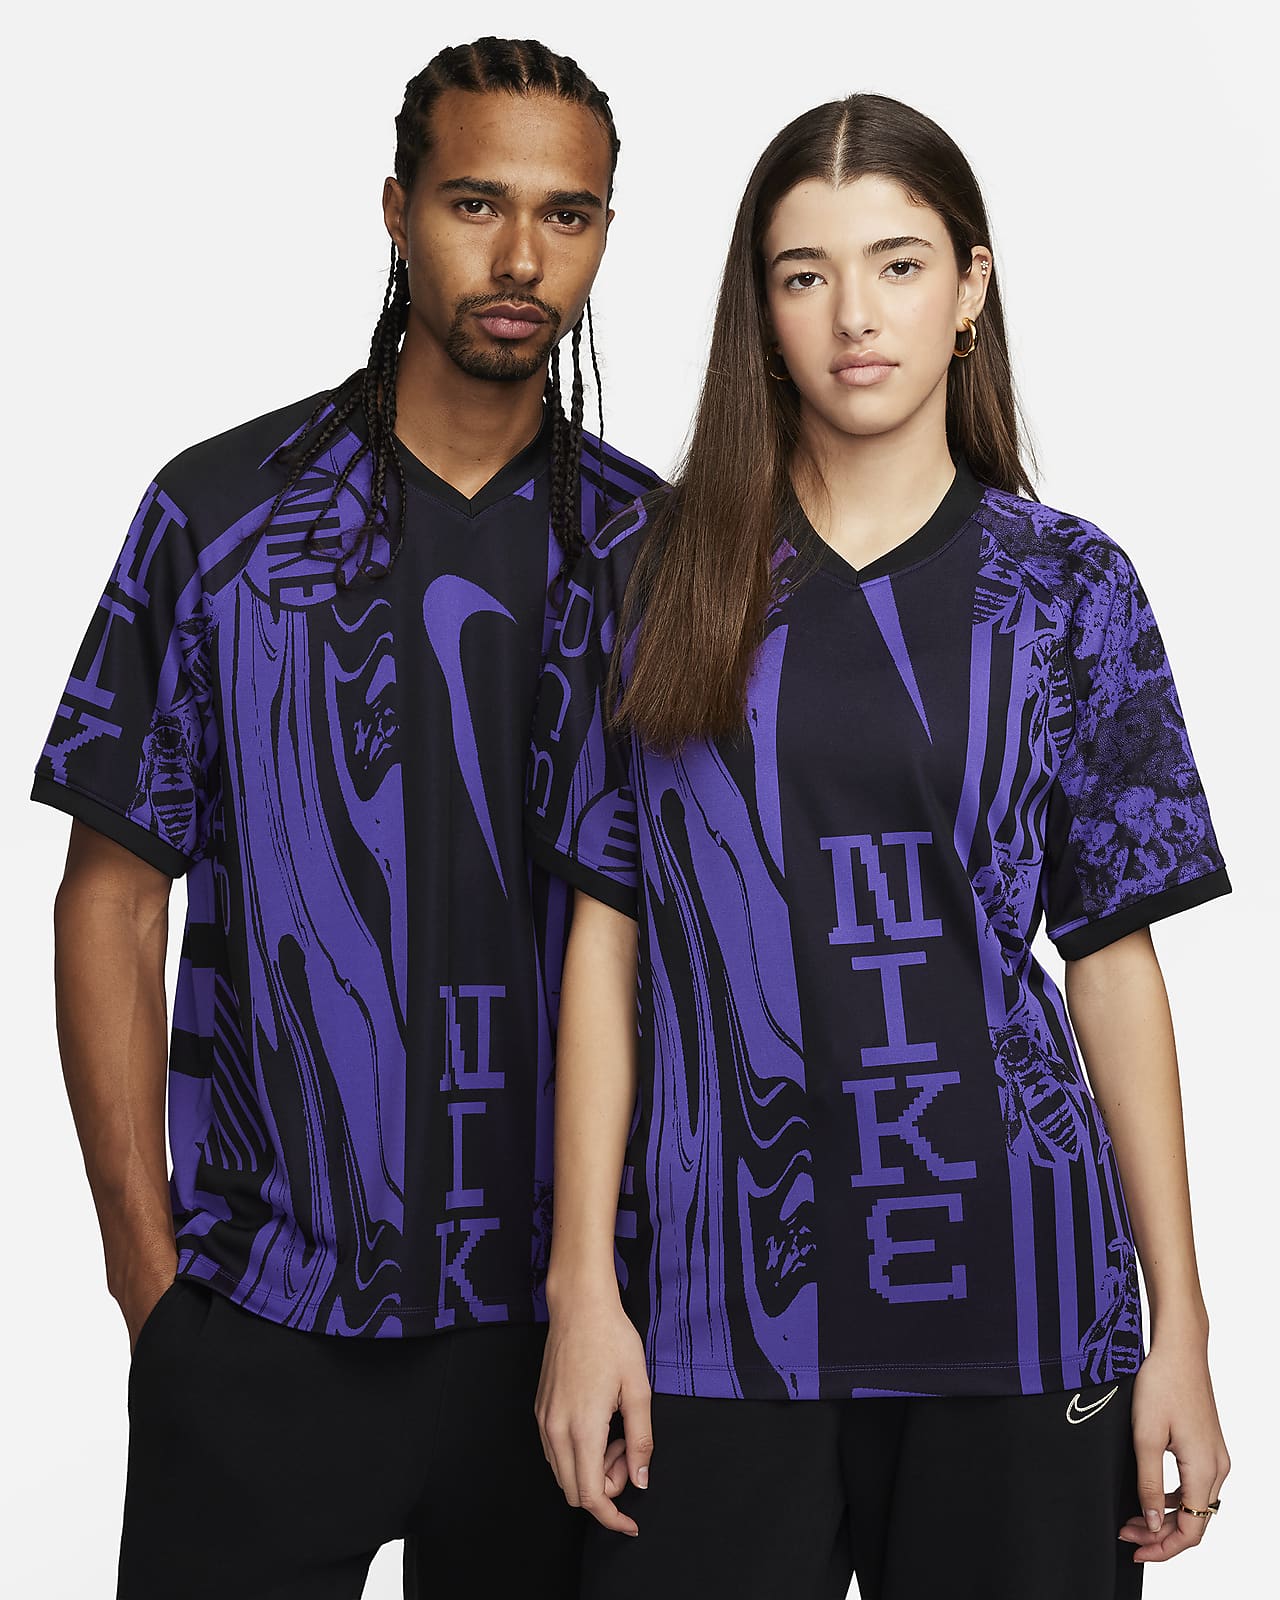 Nike Culture of Football Men's Dri-FIT Short-Sleeve Soccer Jersey.